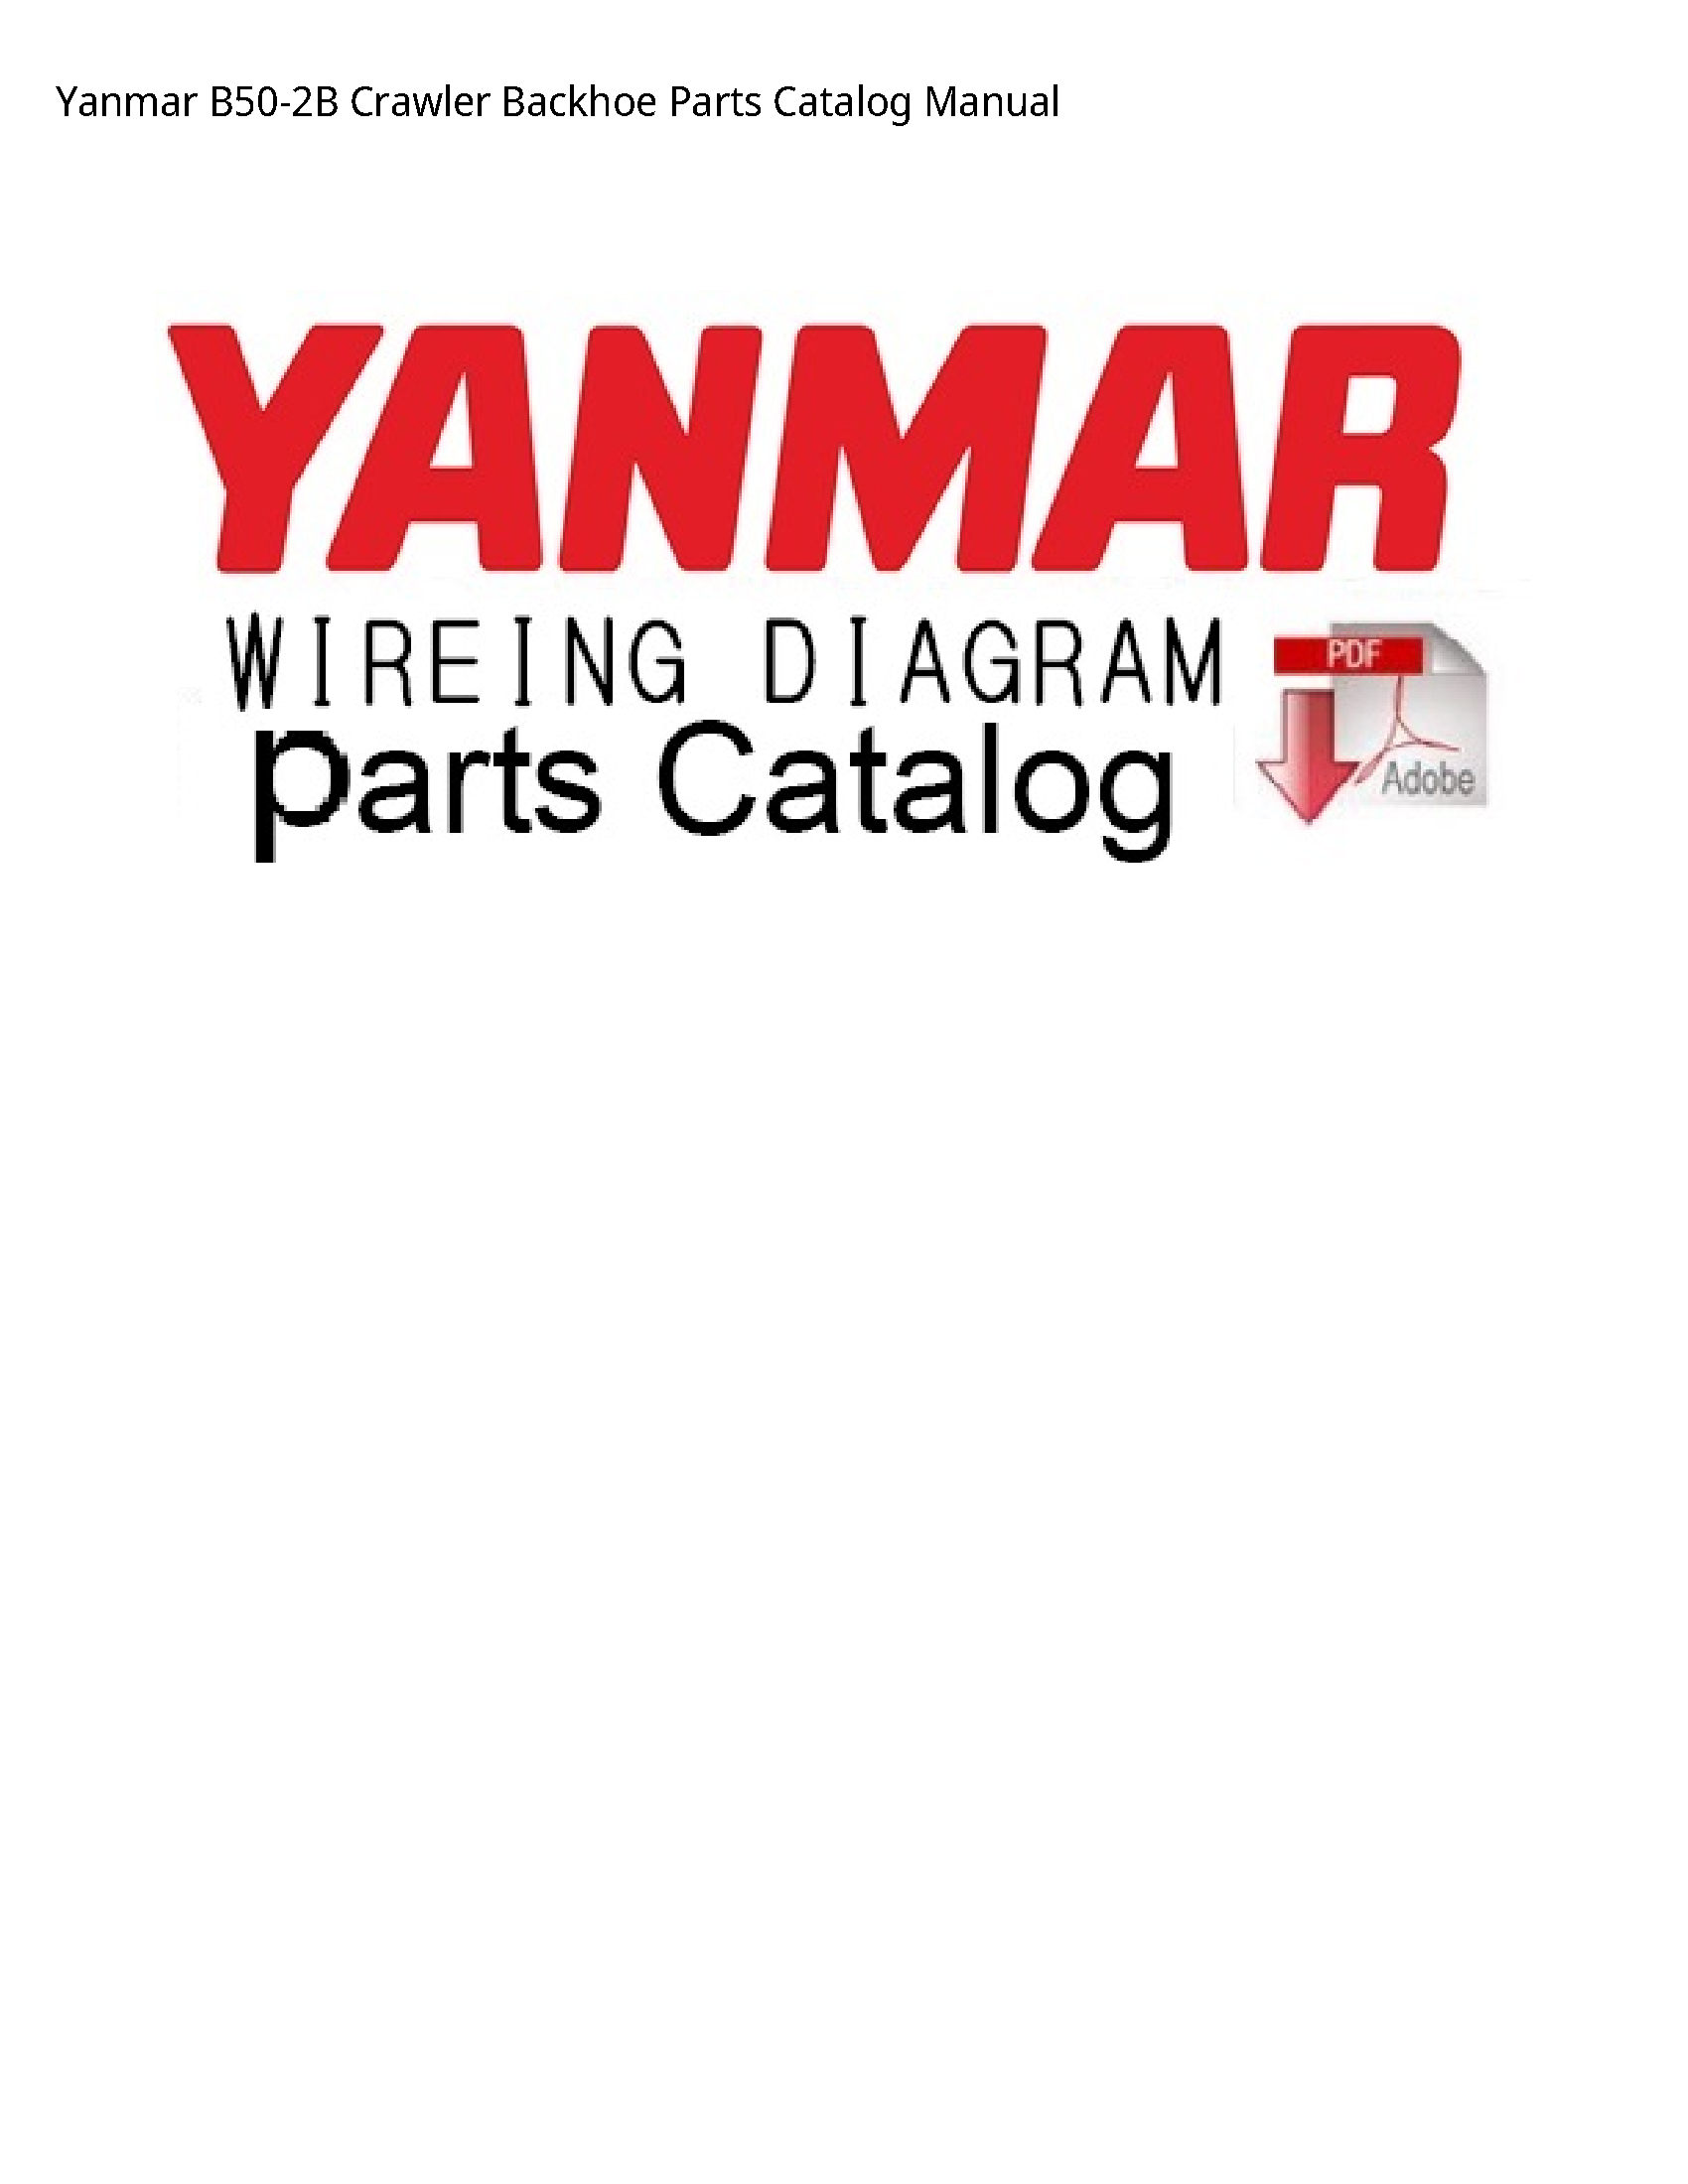 Yanmar B50-2B Crawler Backhoe Parts Catalog manual